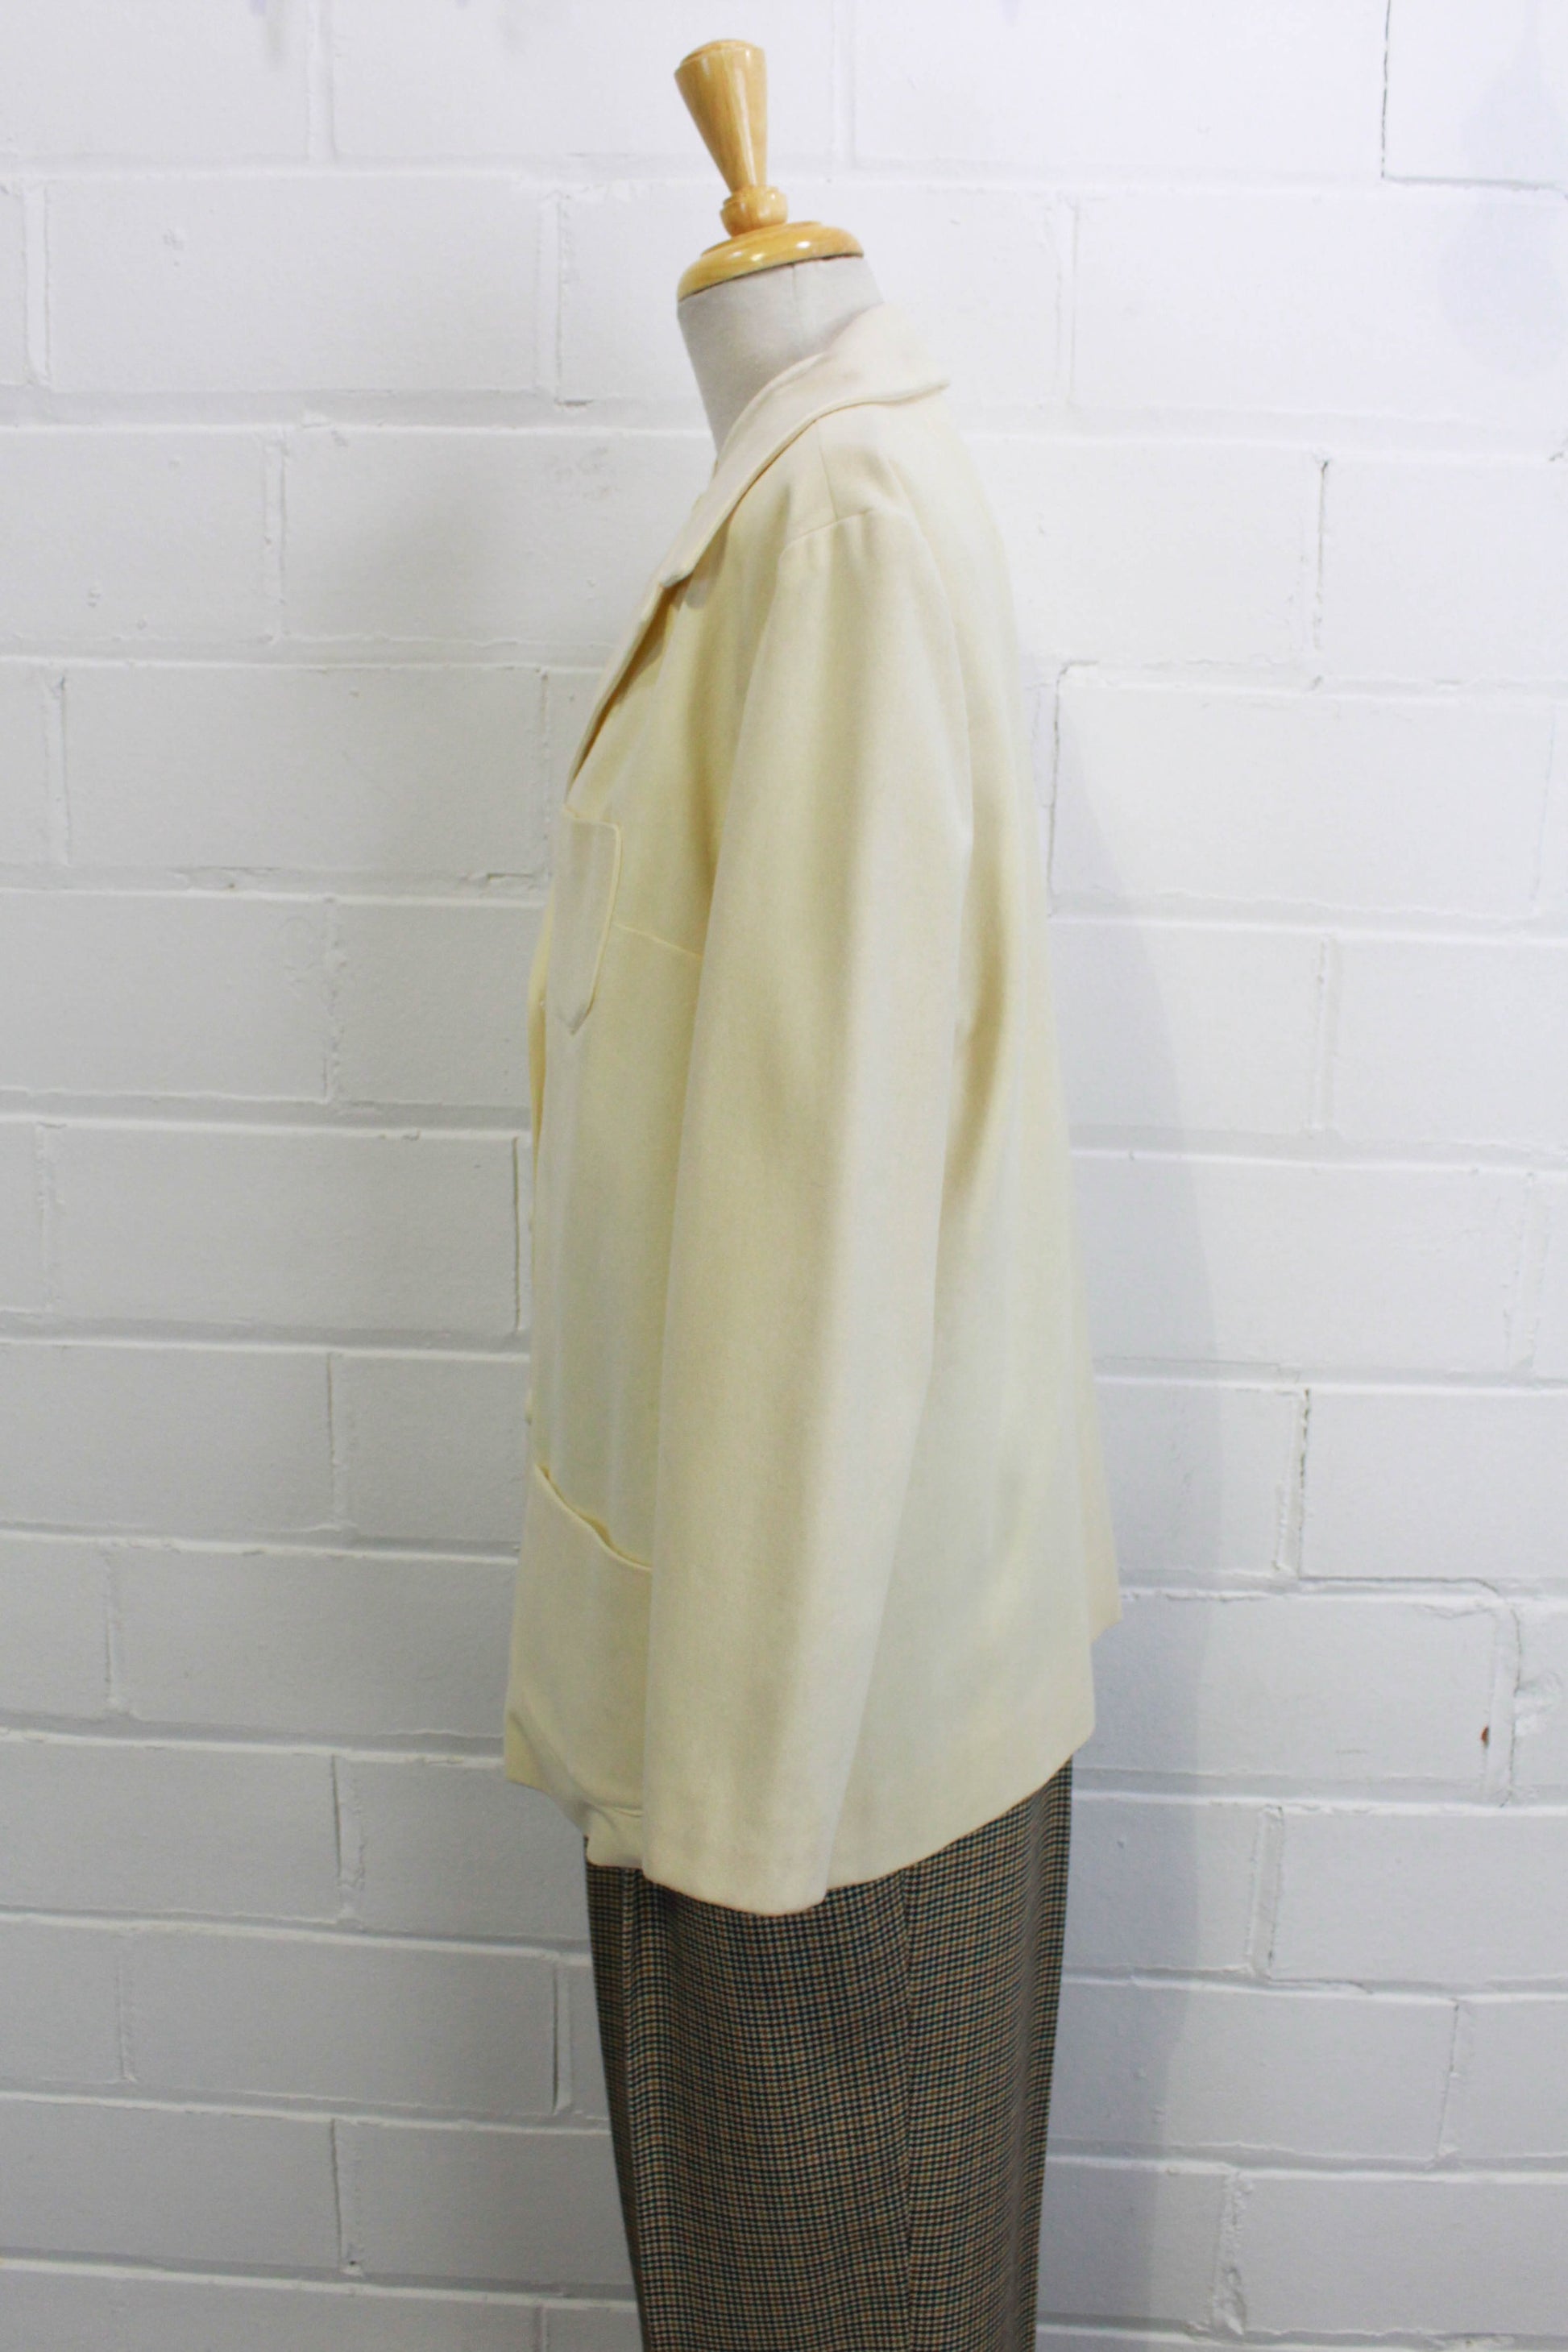 1960s 1970s Vintage Cream Wool Mod Blazer Women's Jacket, Patch Pockets